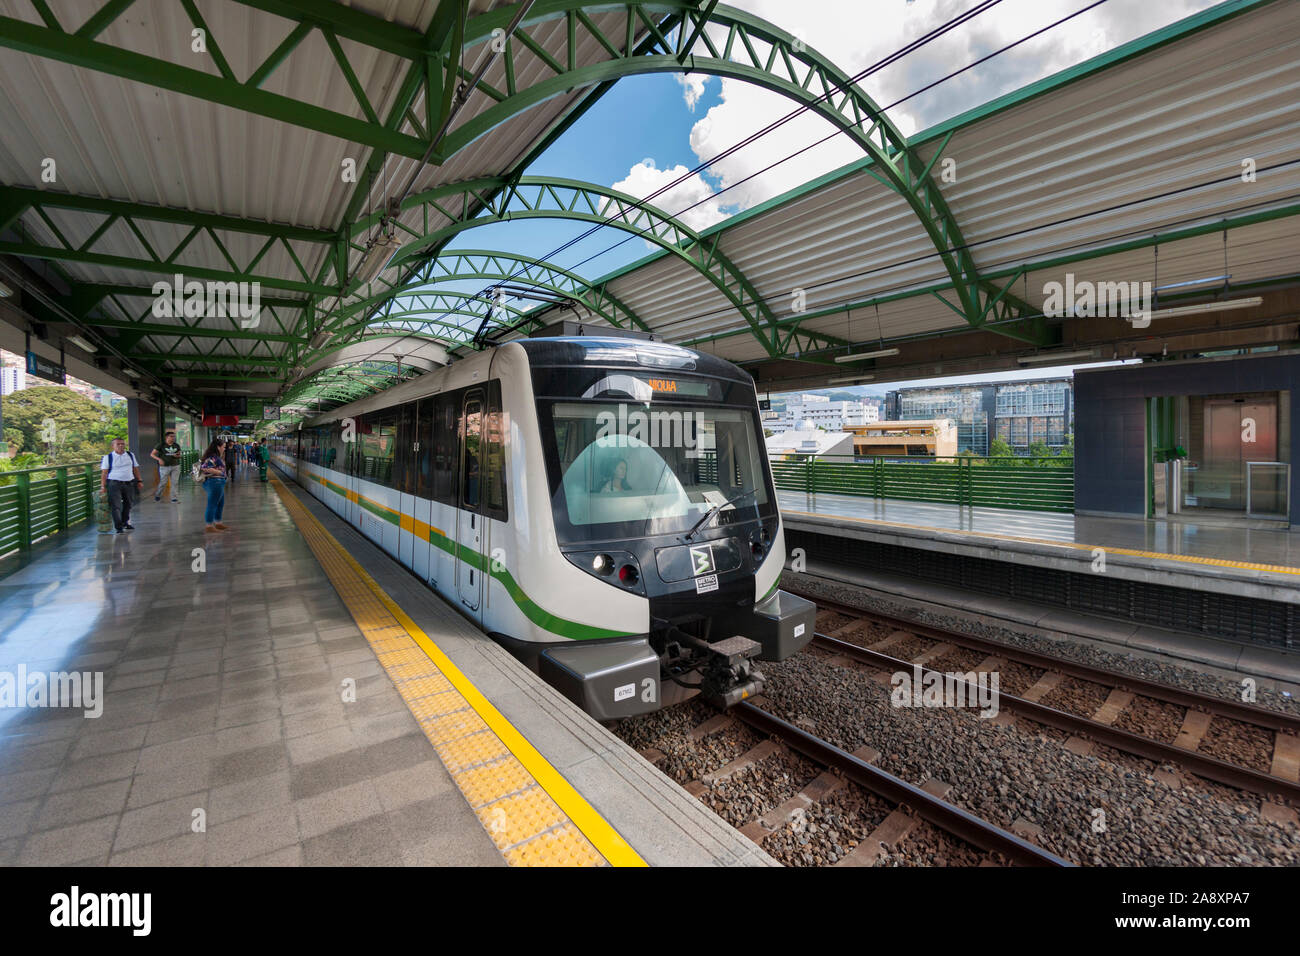 Metro train at Universidad station in Medellin, Colombia. Stock Photo